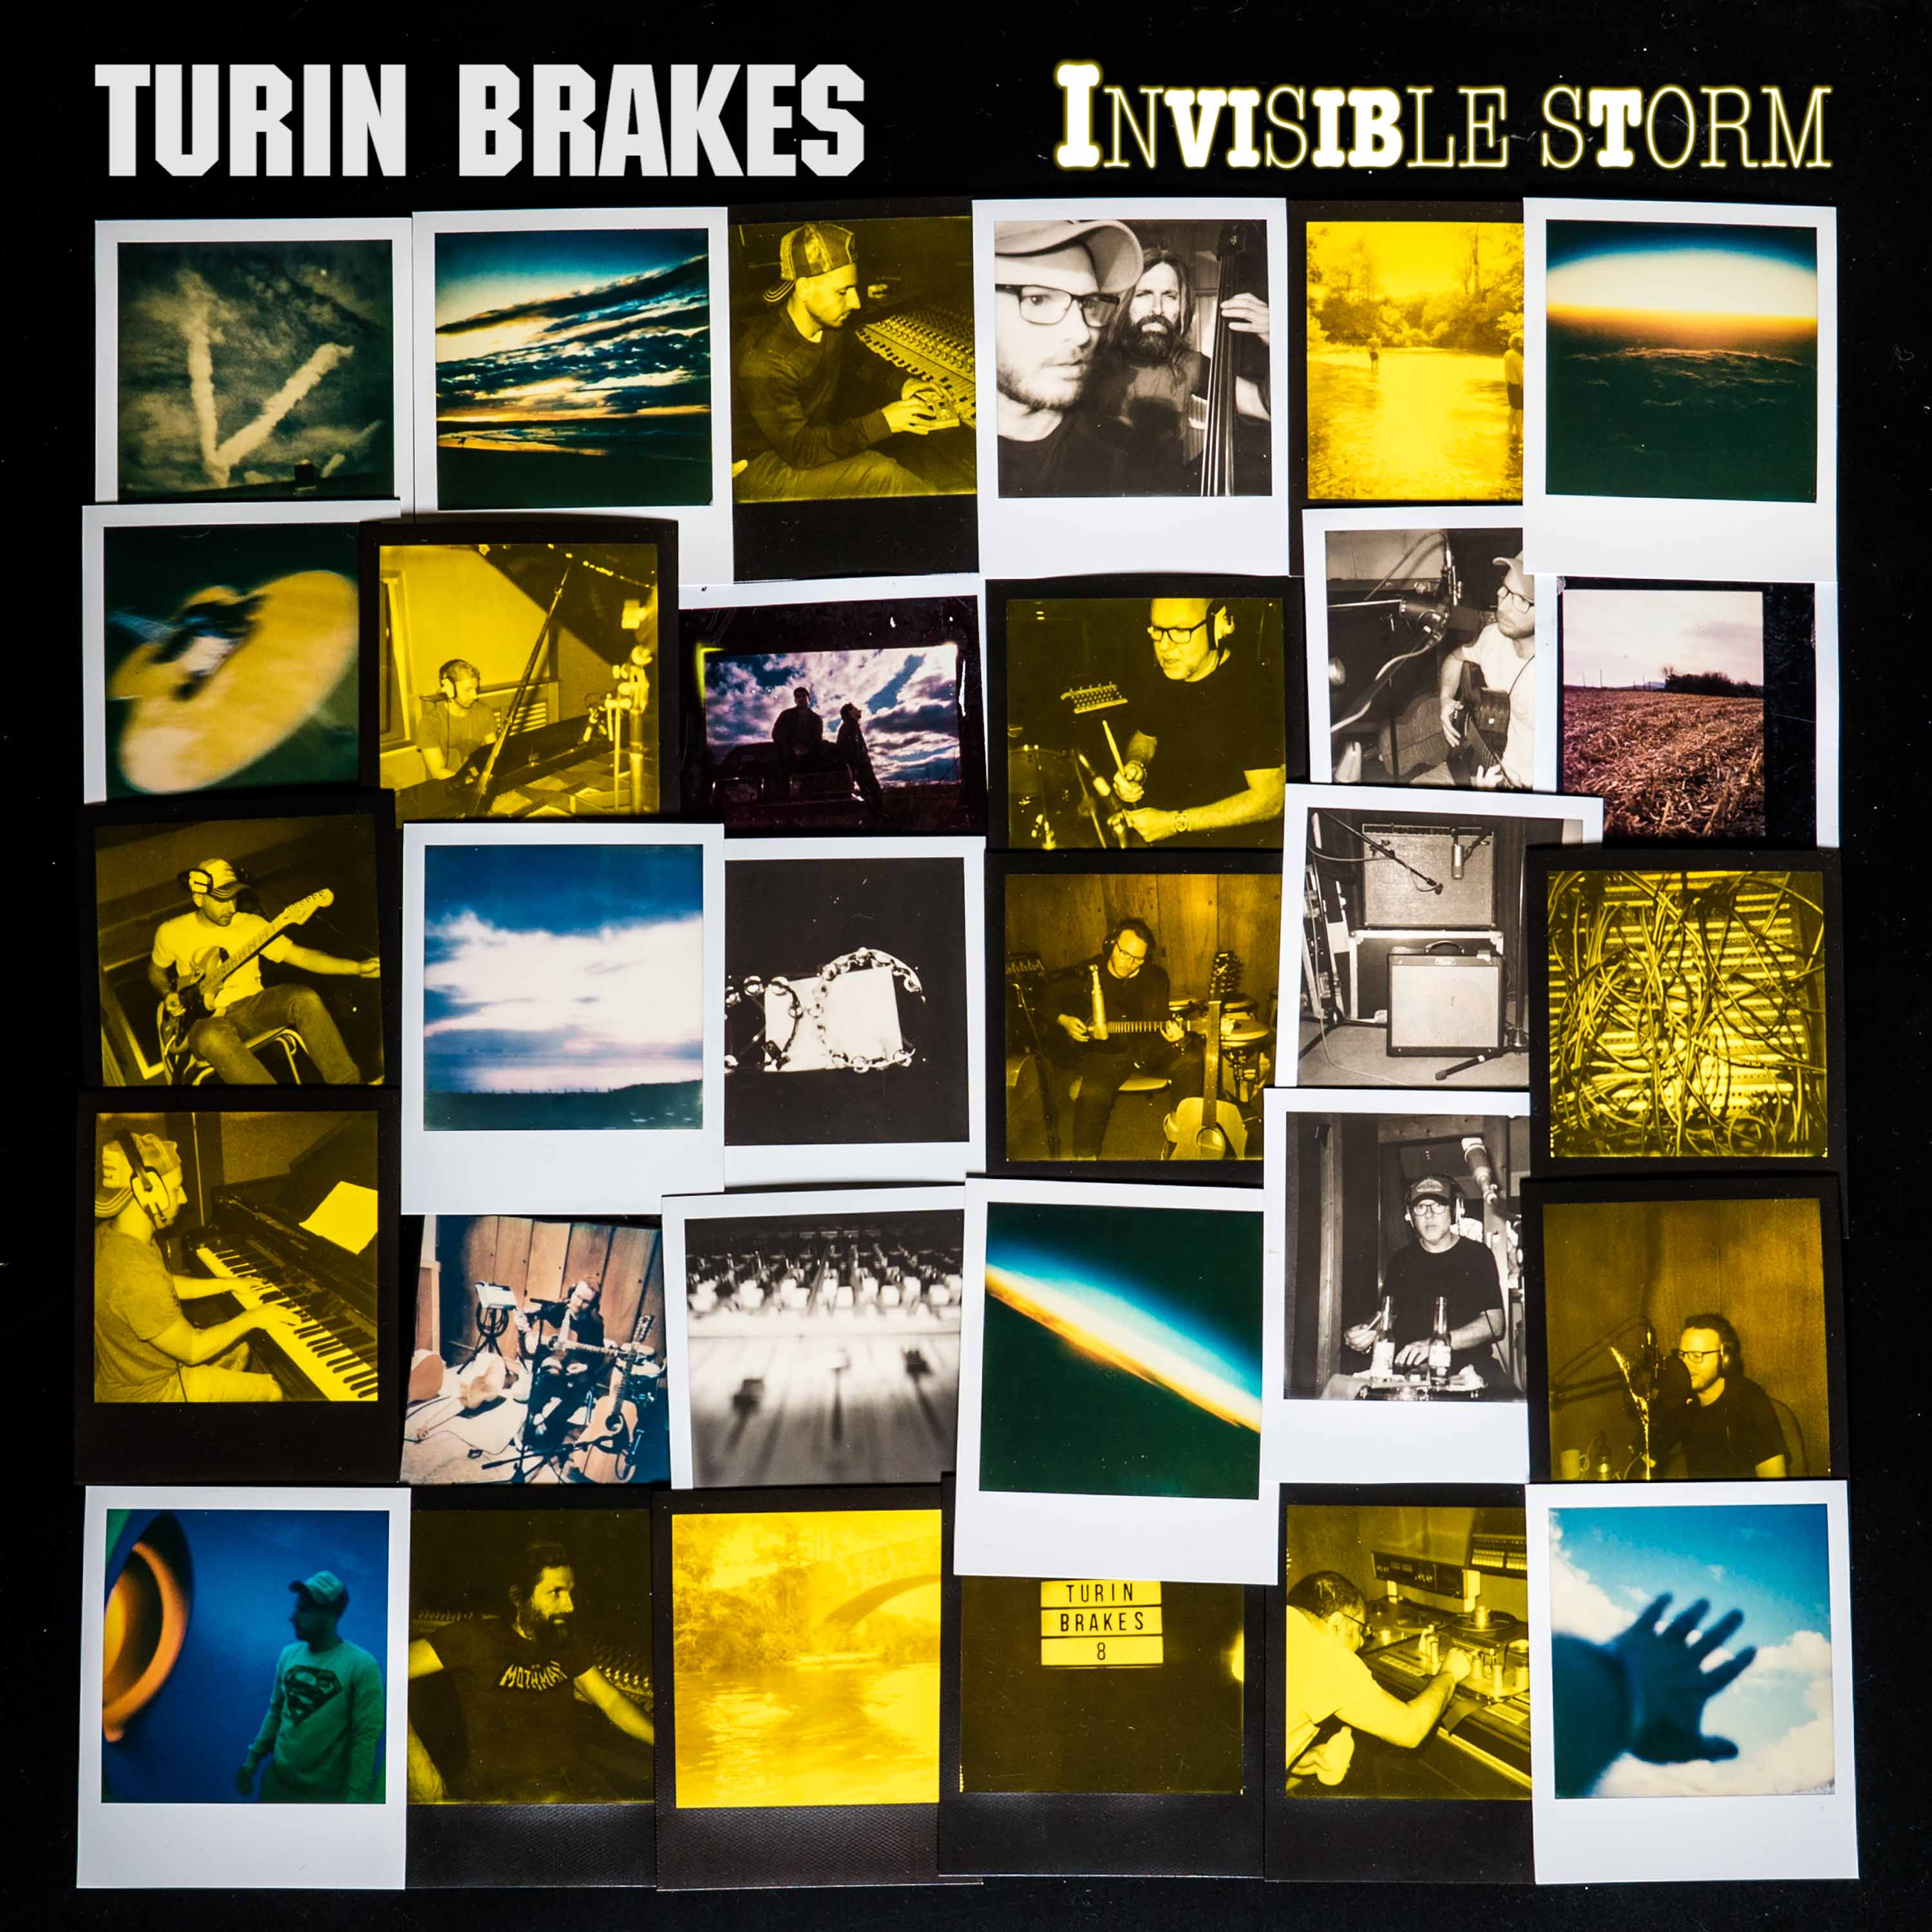 Turin brakes singles